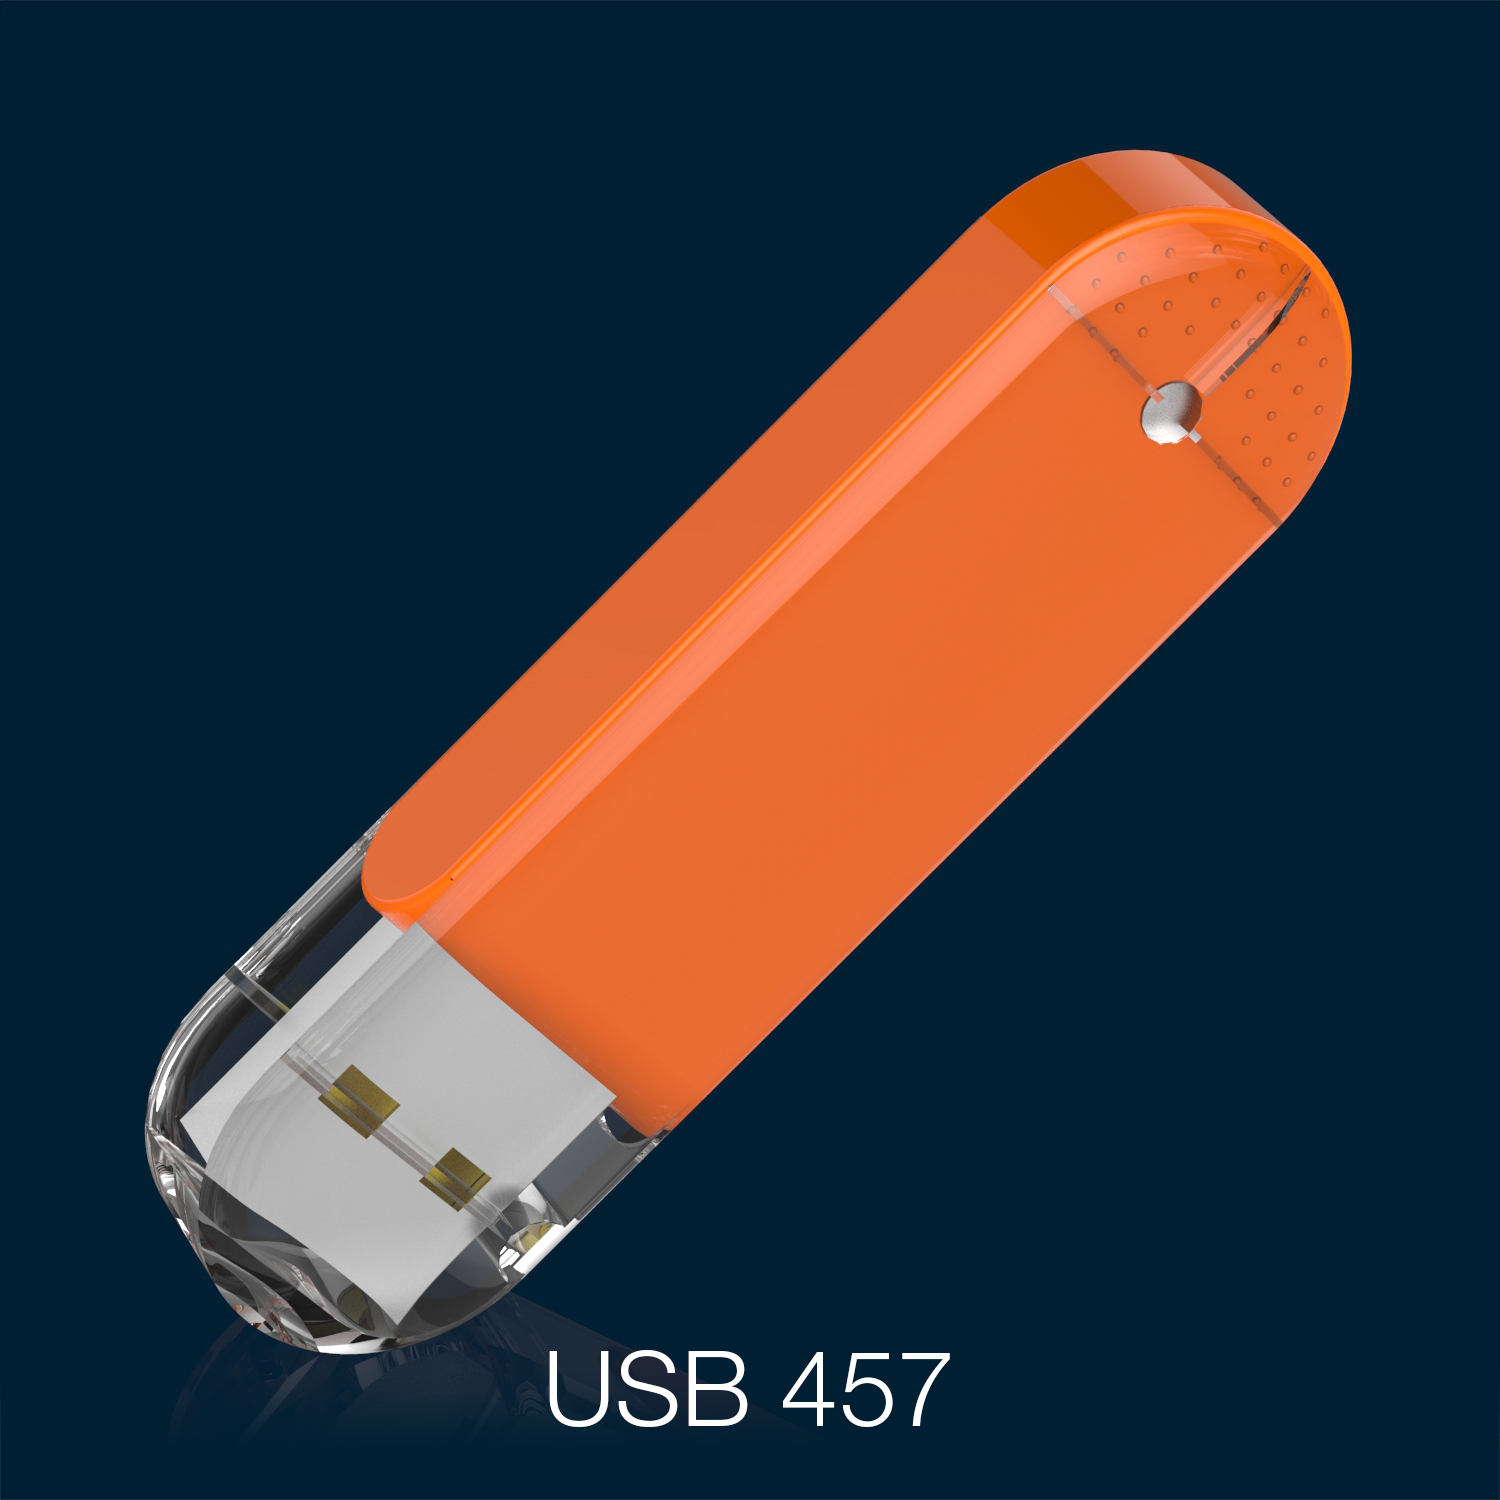 USB 457